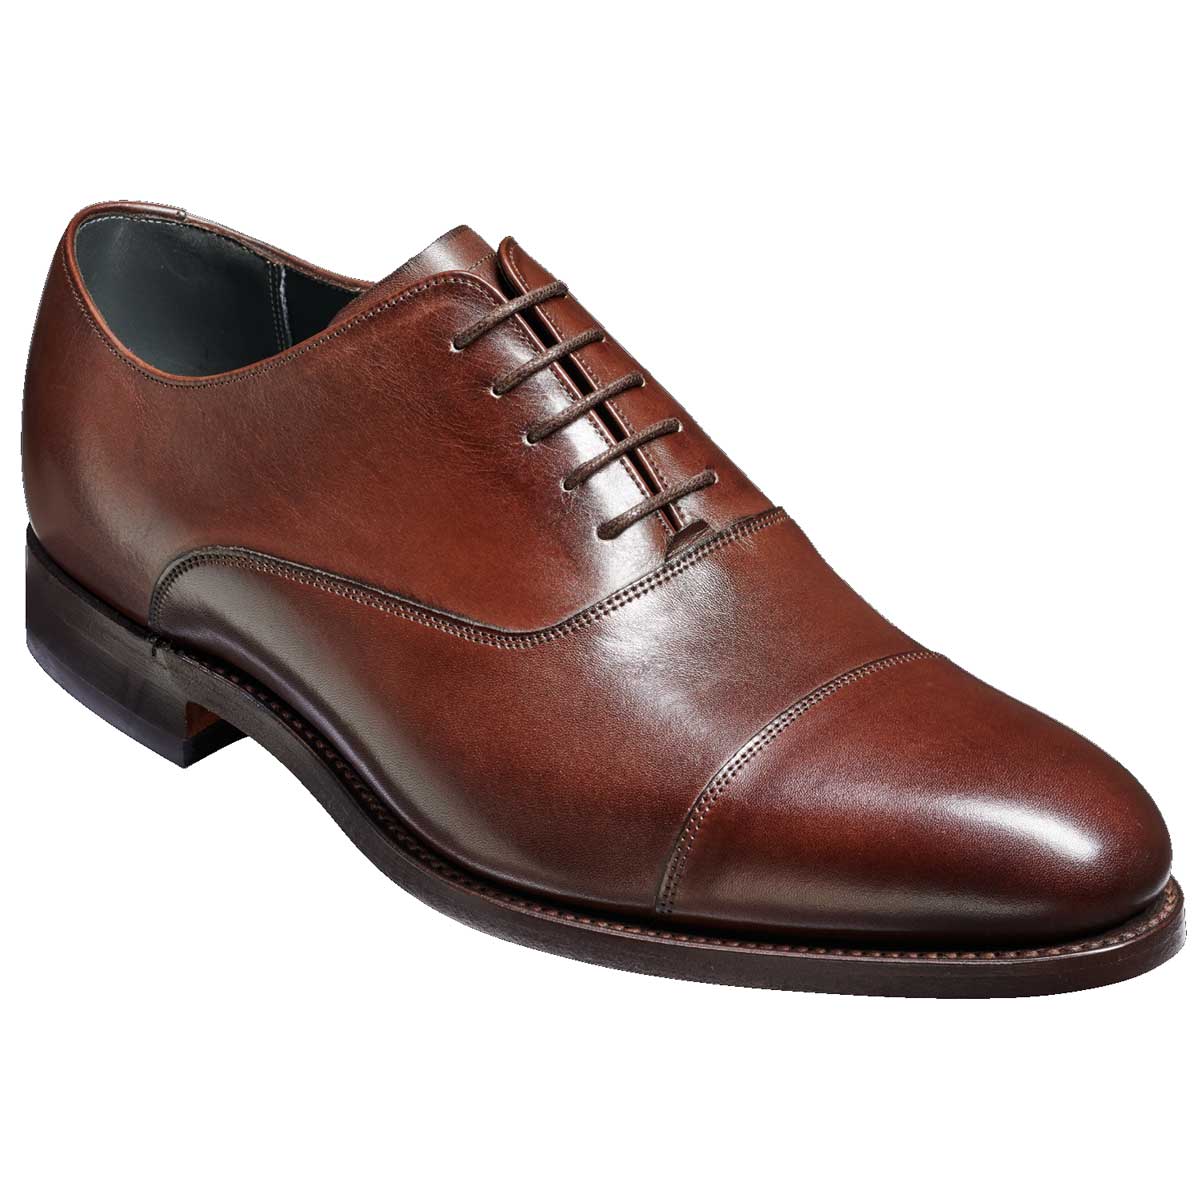 BARKER Winsford Shoes - Mens Oxford - Dark Walnut Calf